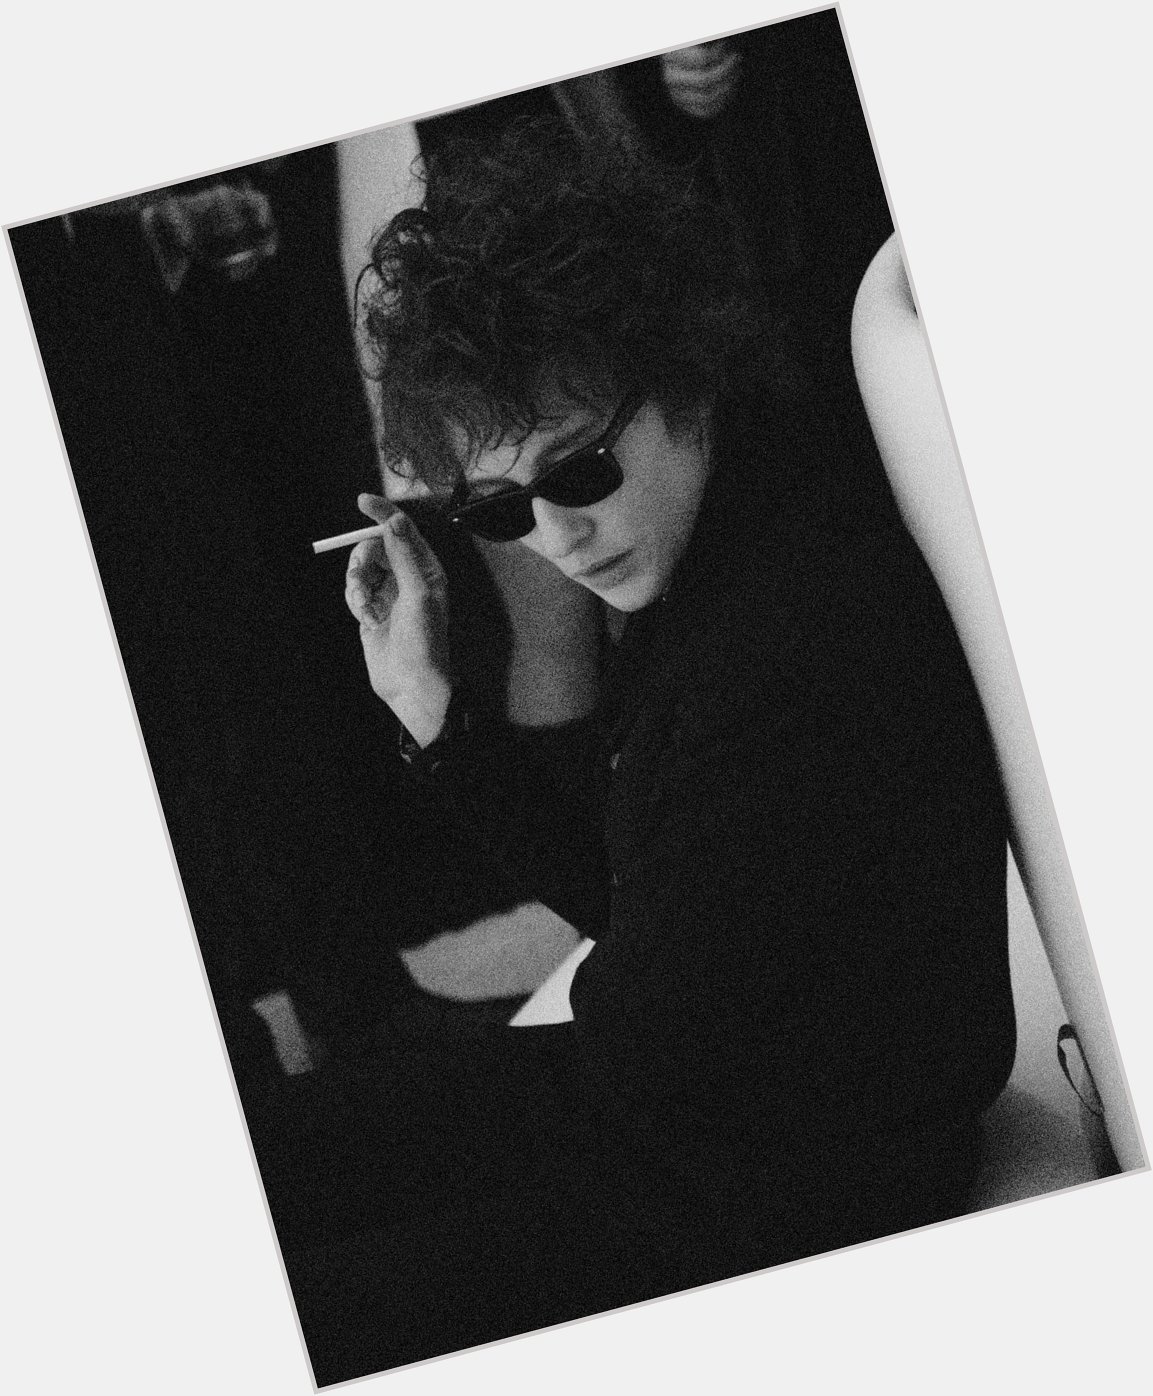 Happy birthday to the living legend, Bob Dylan! 